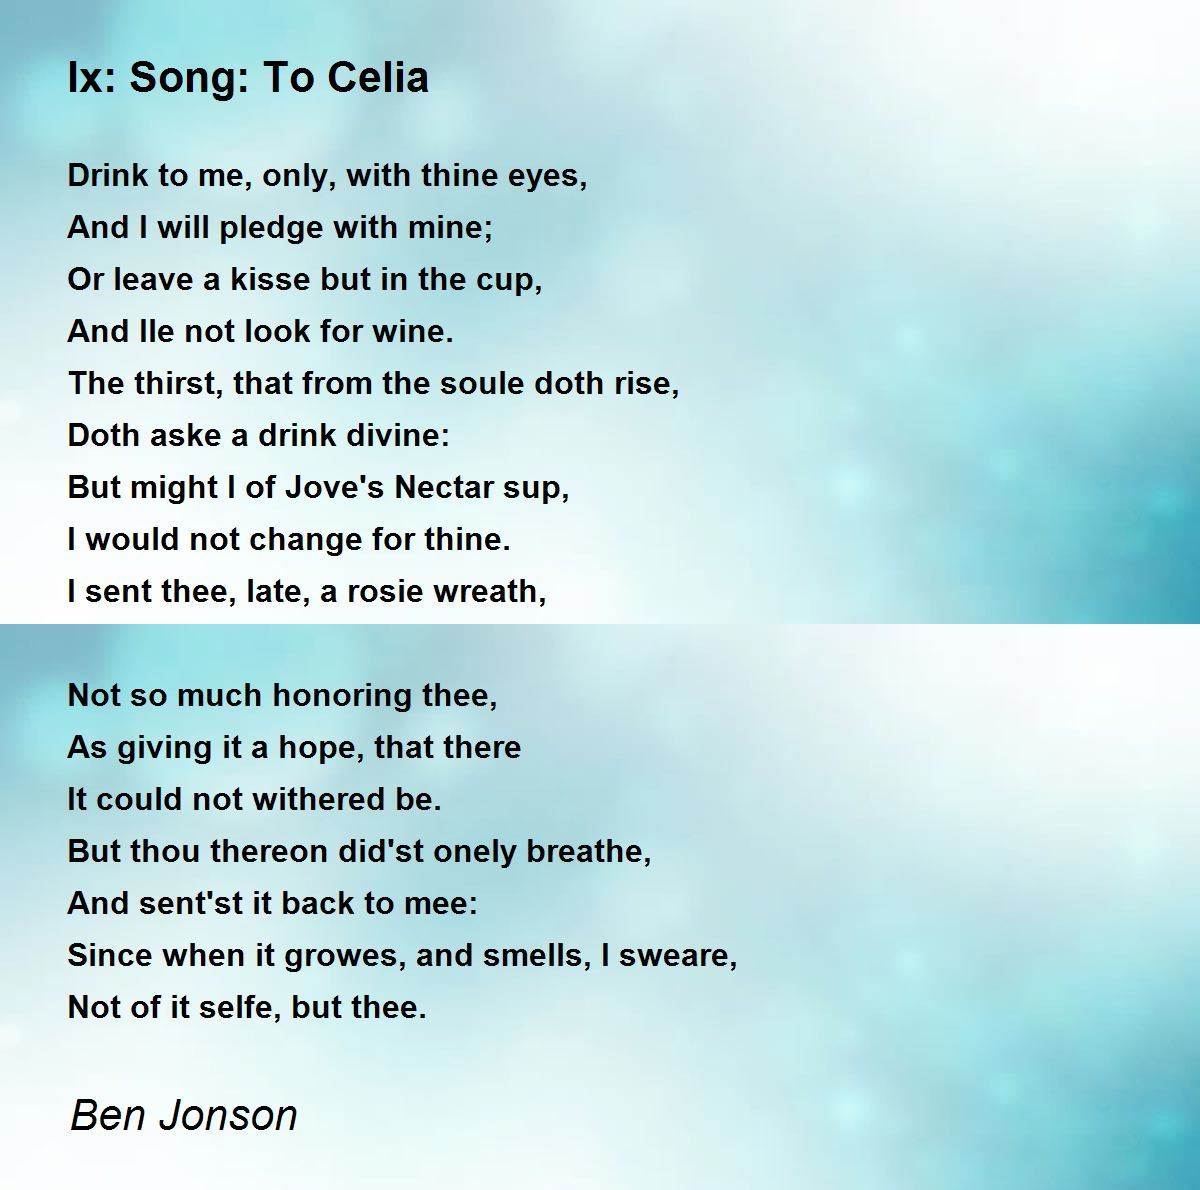 Ben Jonson "Plays and poems". Celia poem by b en Johnson.